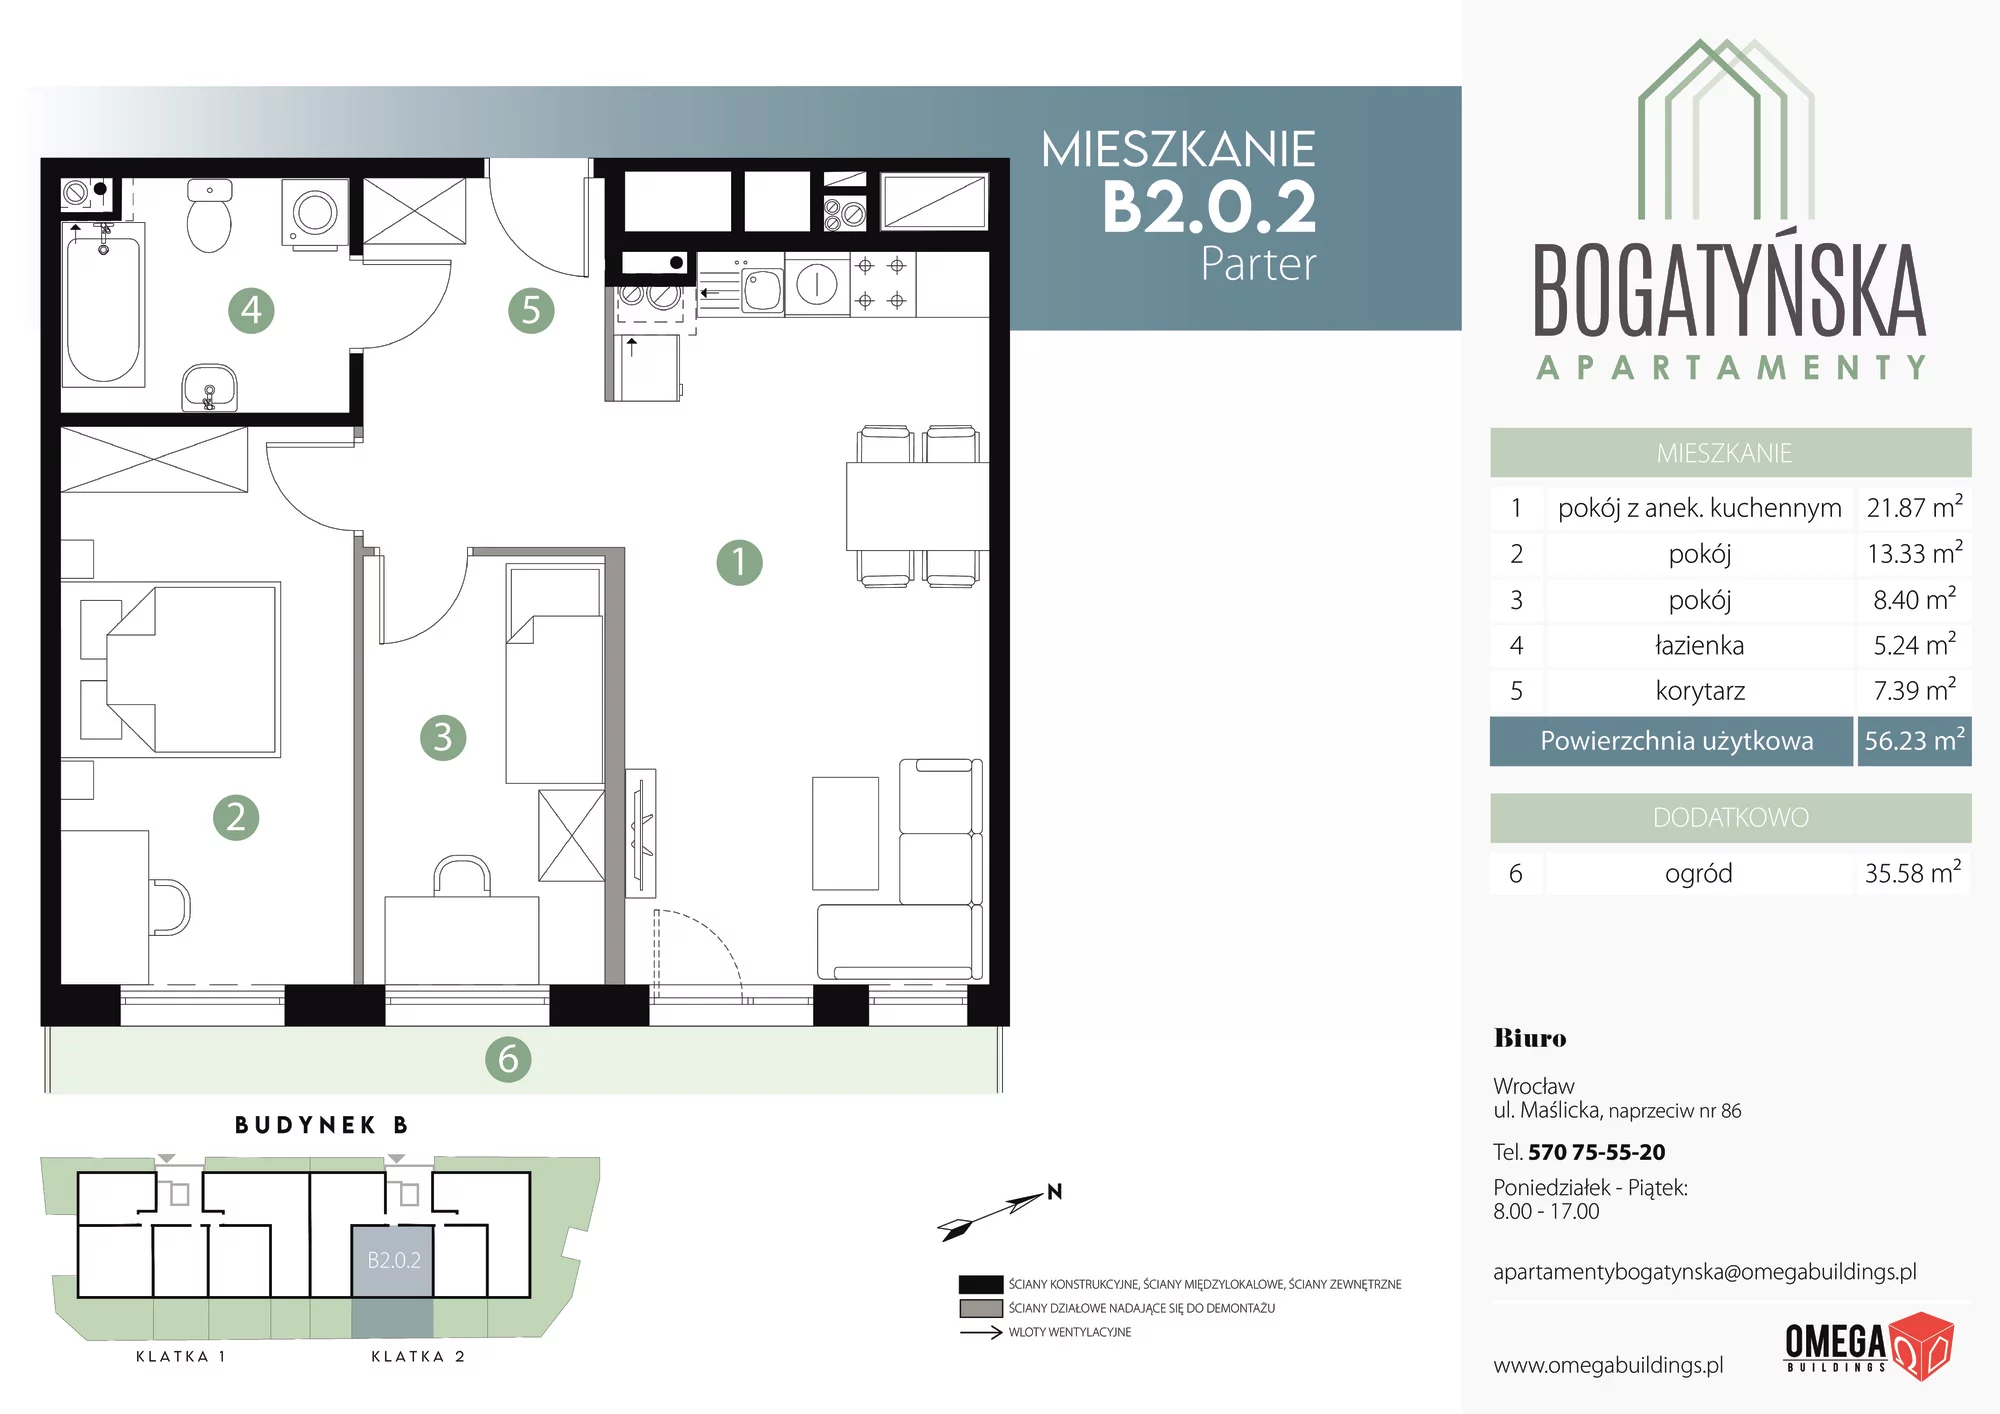 Apartament 56,23 m², parter, oferta nr B2.0.2, Bogatyńska Apartamenty, Wrocław, Maślice, Fabryczna, ul. Bogatyńska